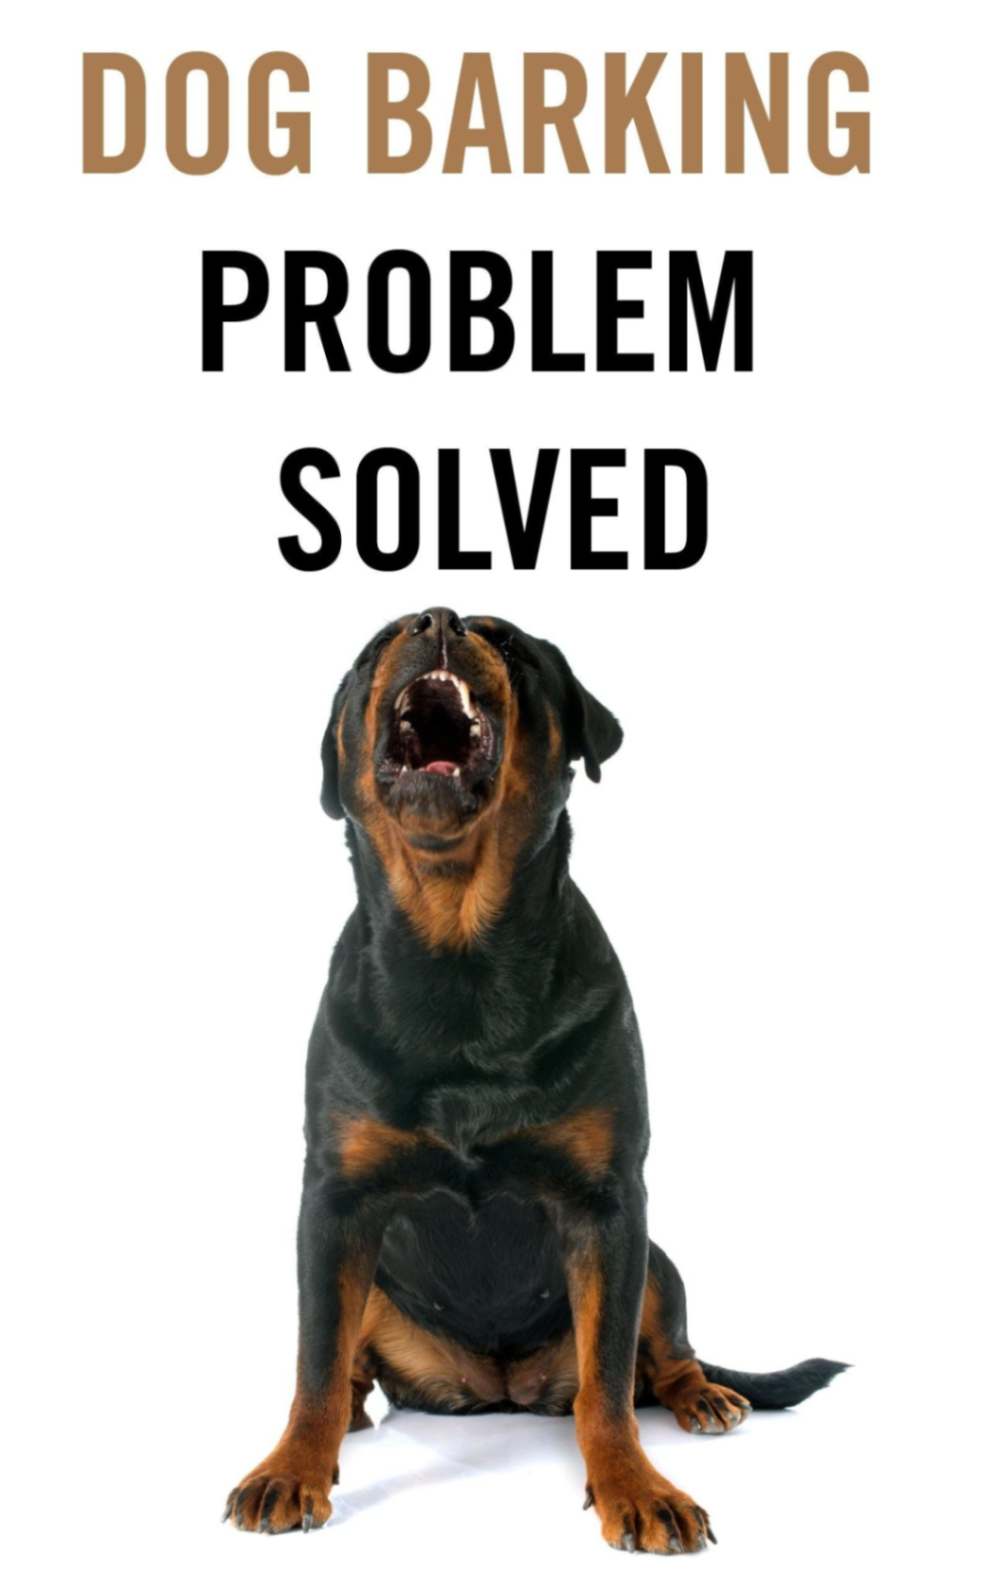 dog barking solutions